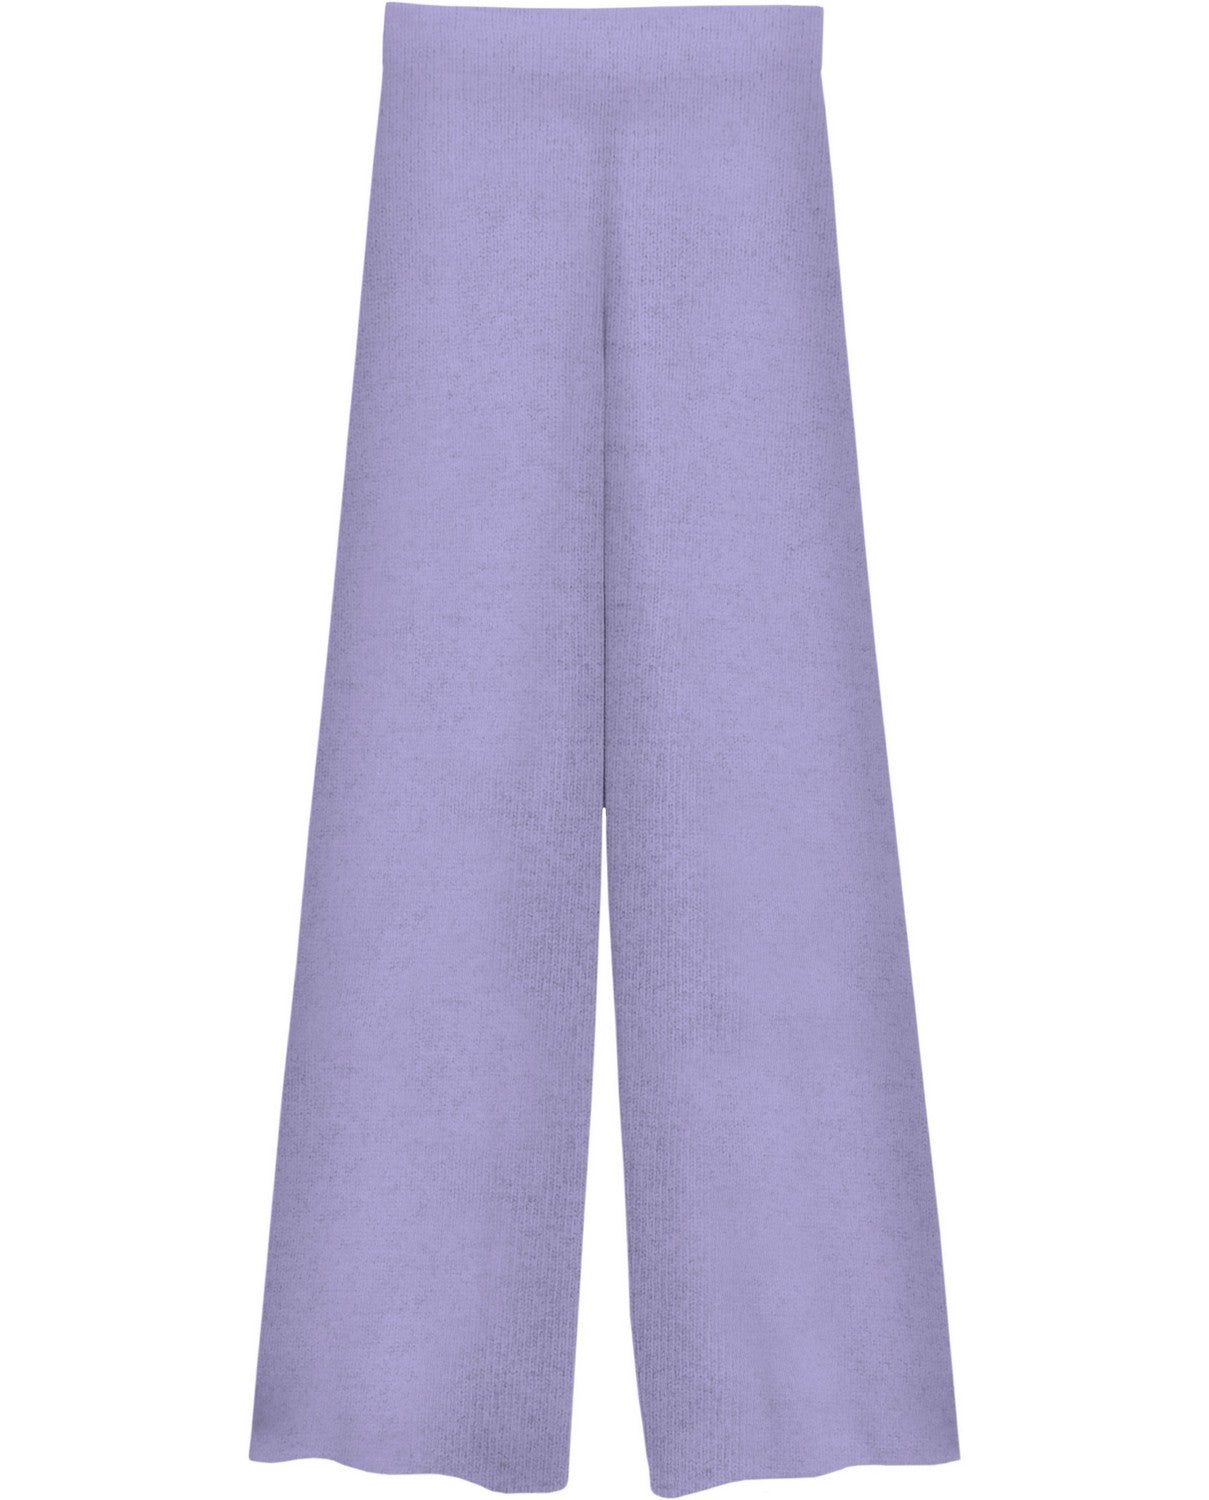 Pantaloni Donna Savine Lilac